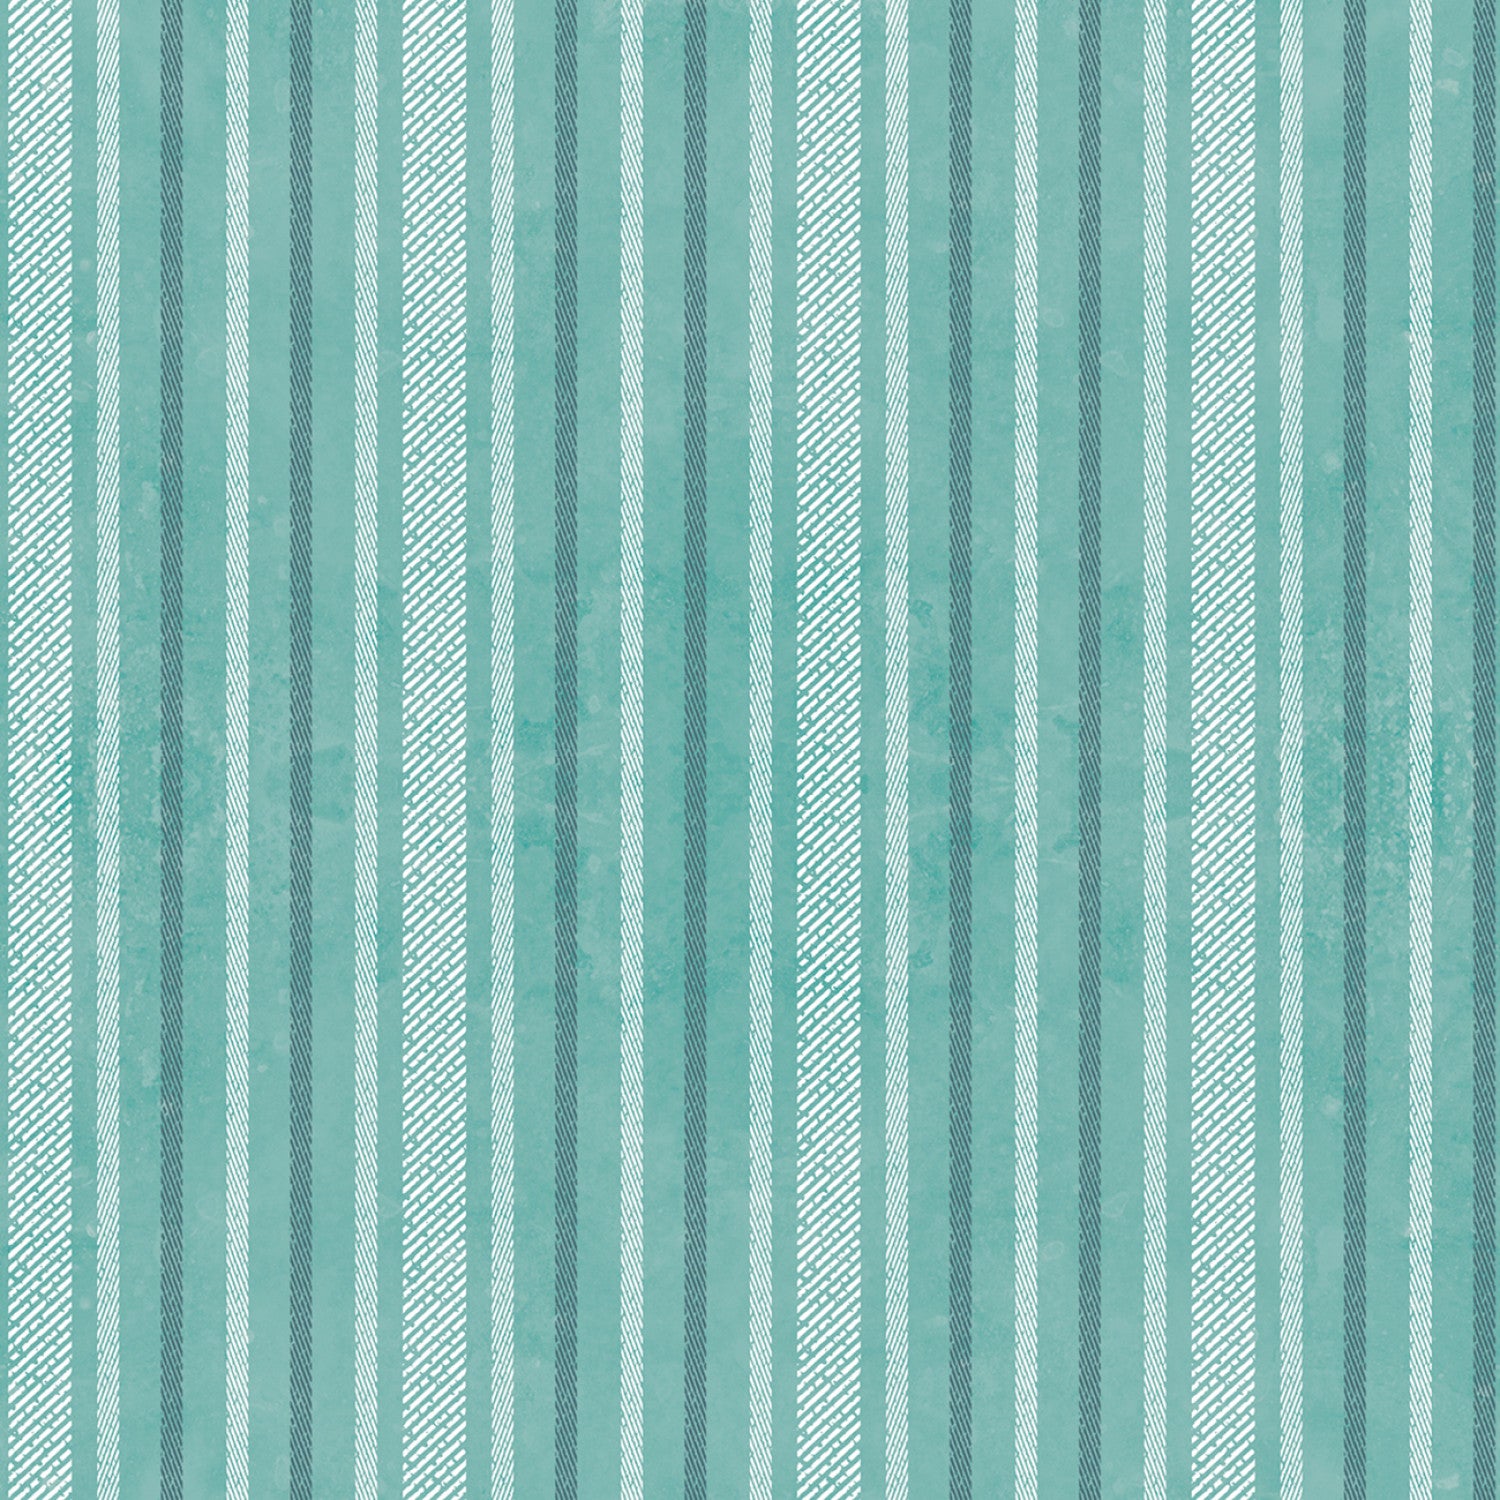 Fabric, Turquoise En Bleu Digital Stripe Y4034-101